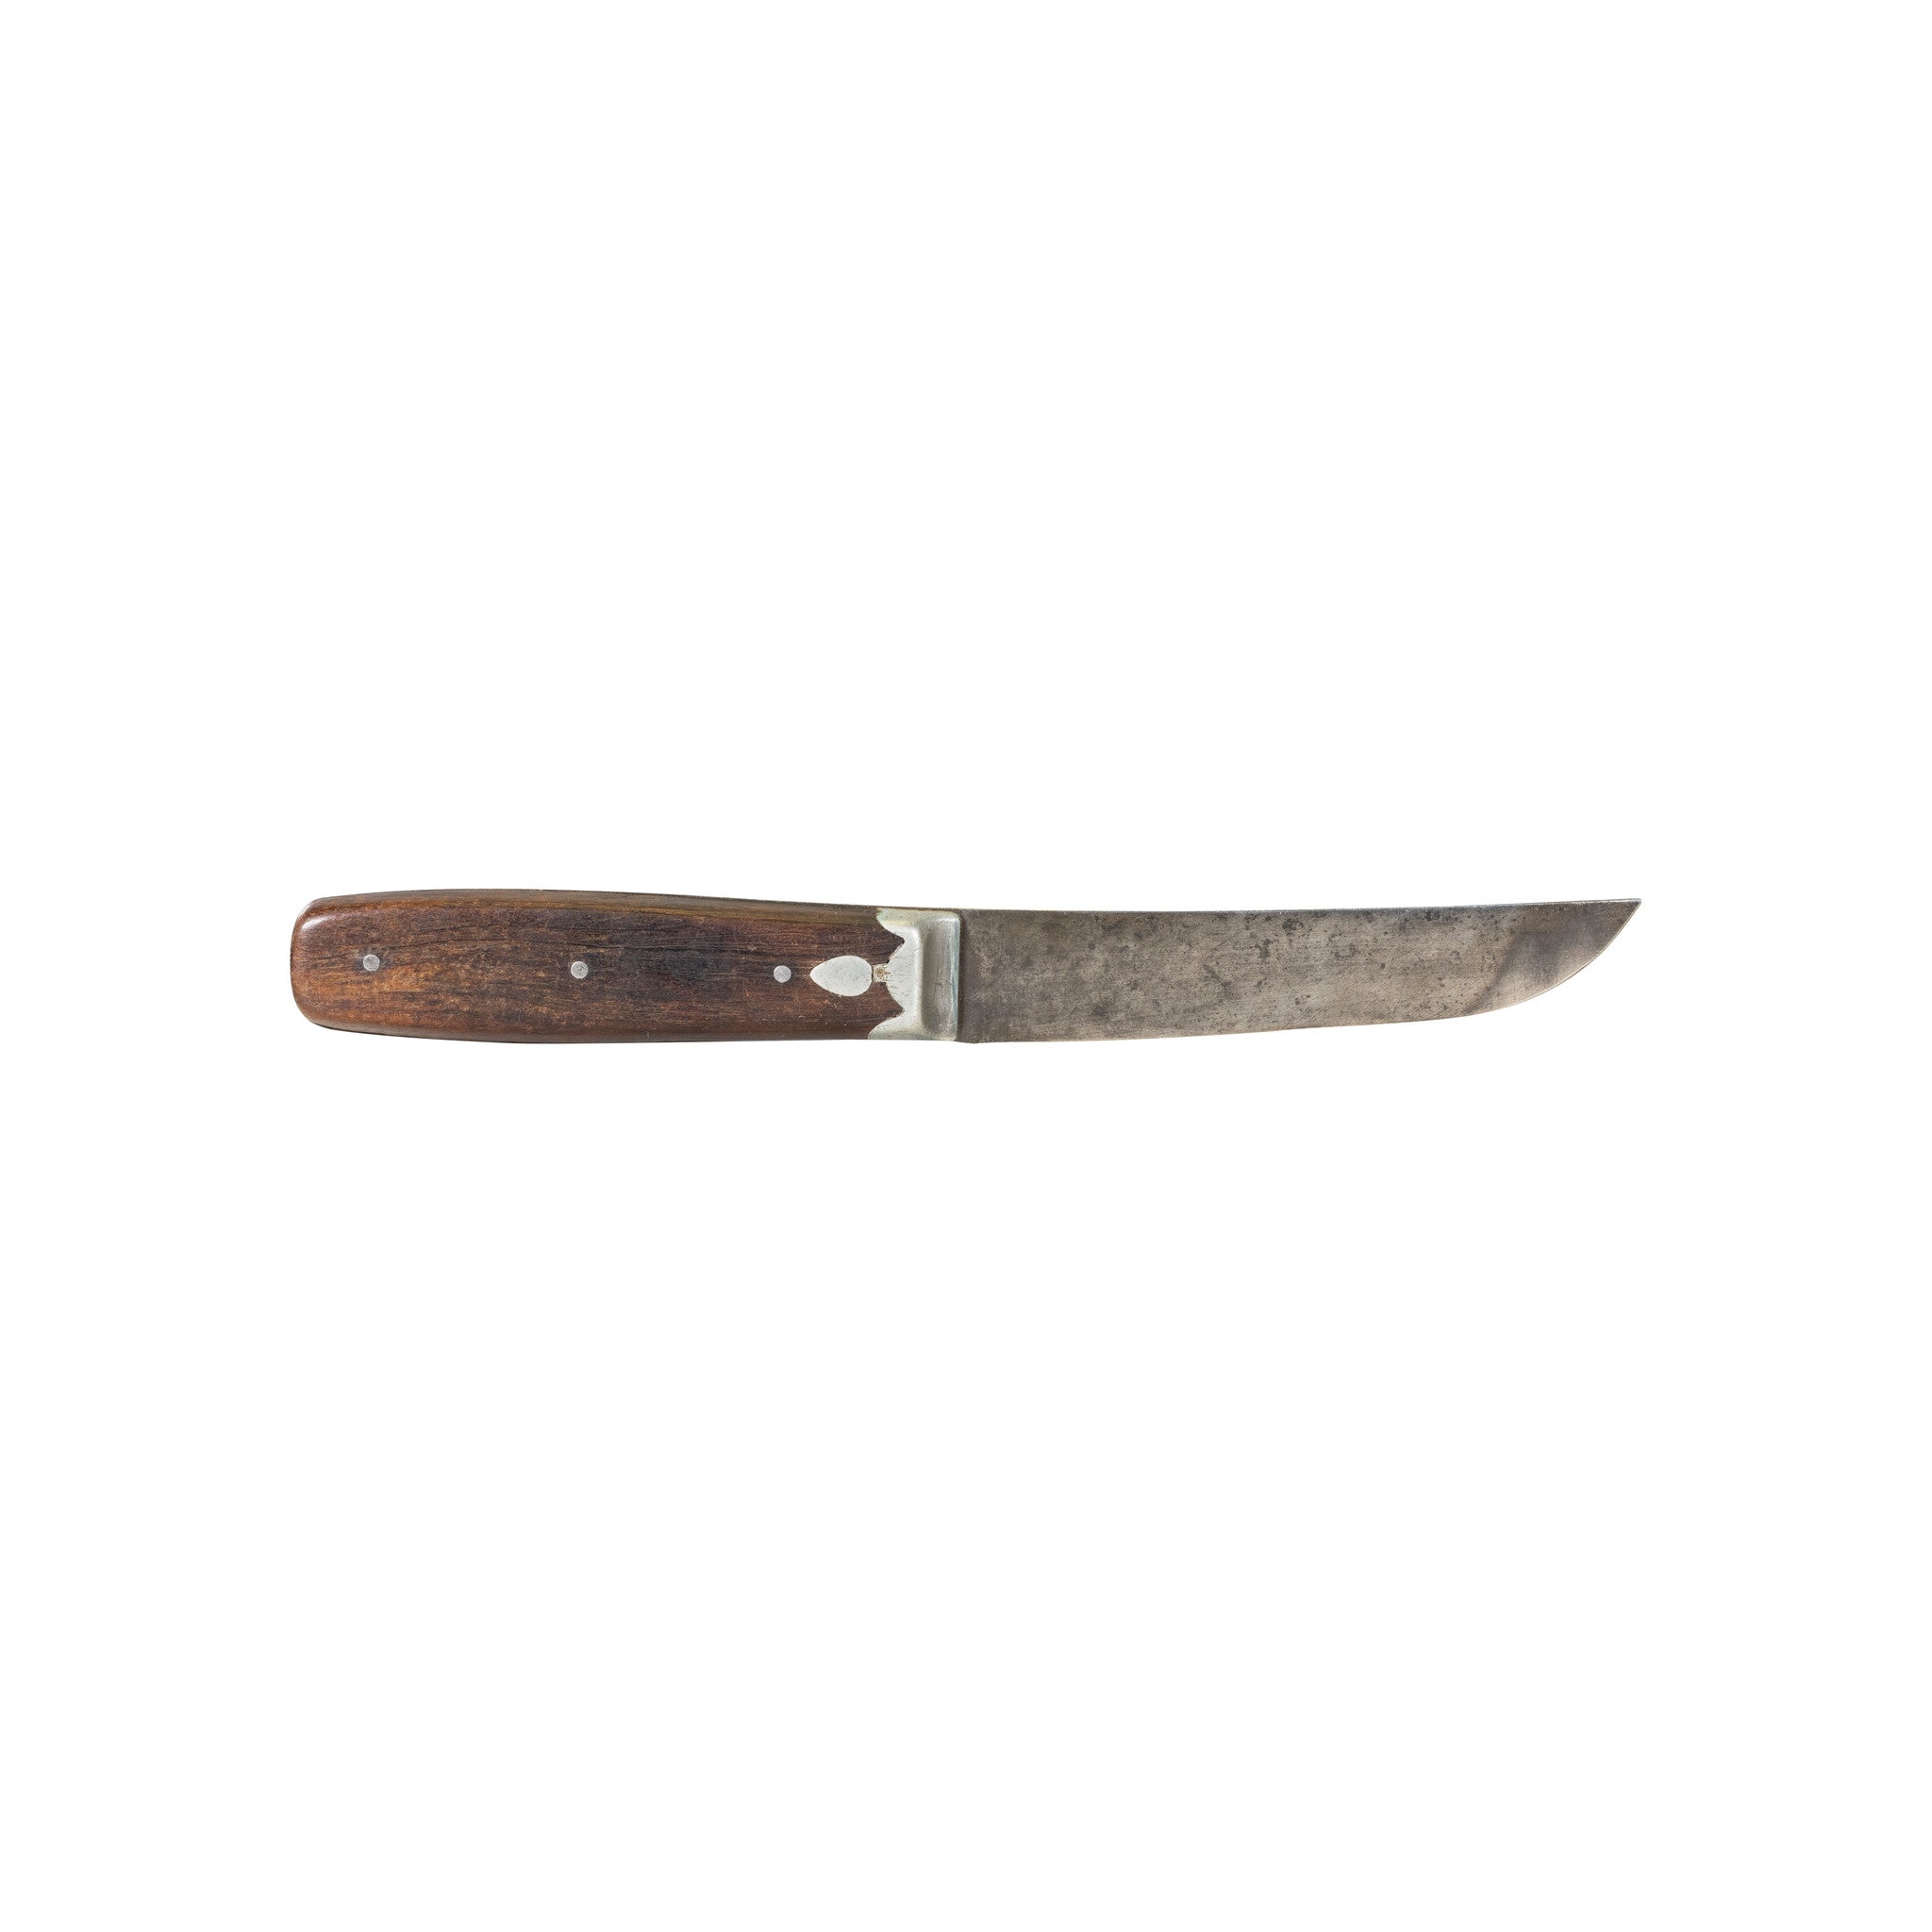 Hudson Bay Trade Knife